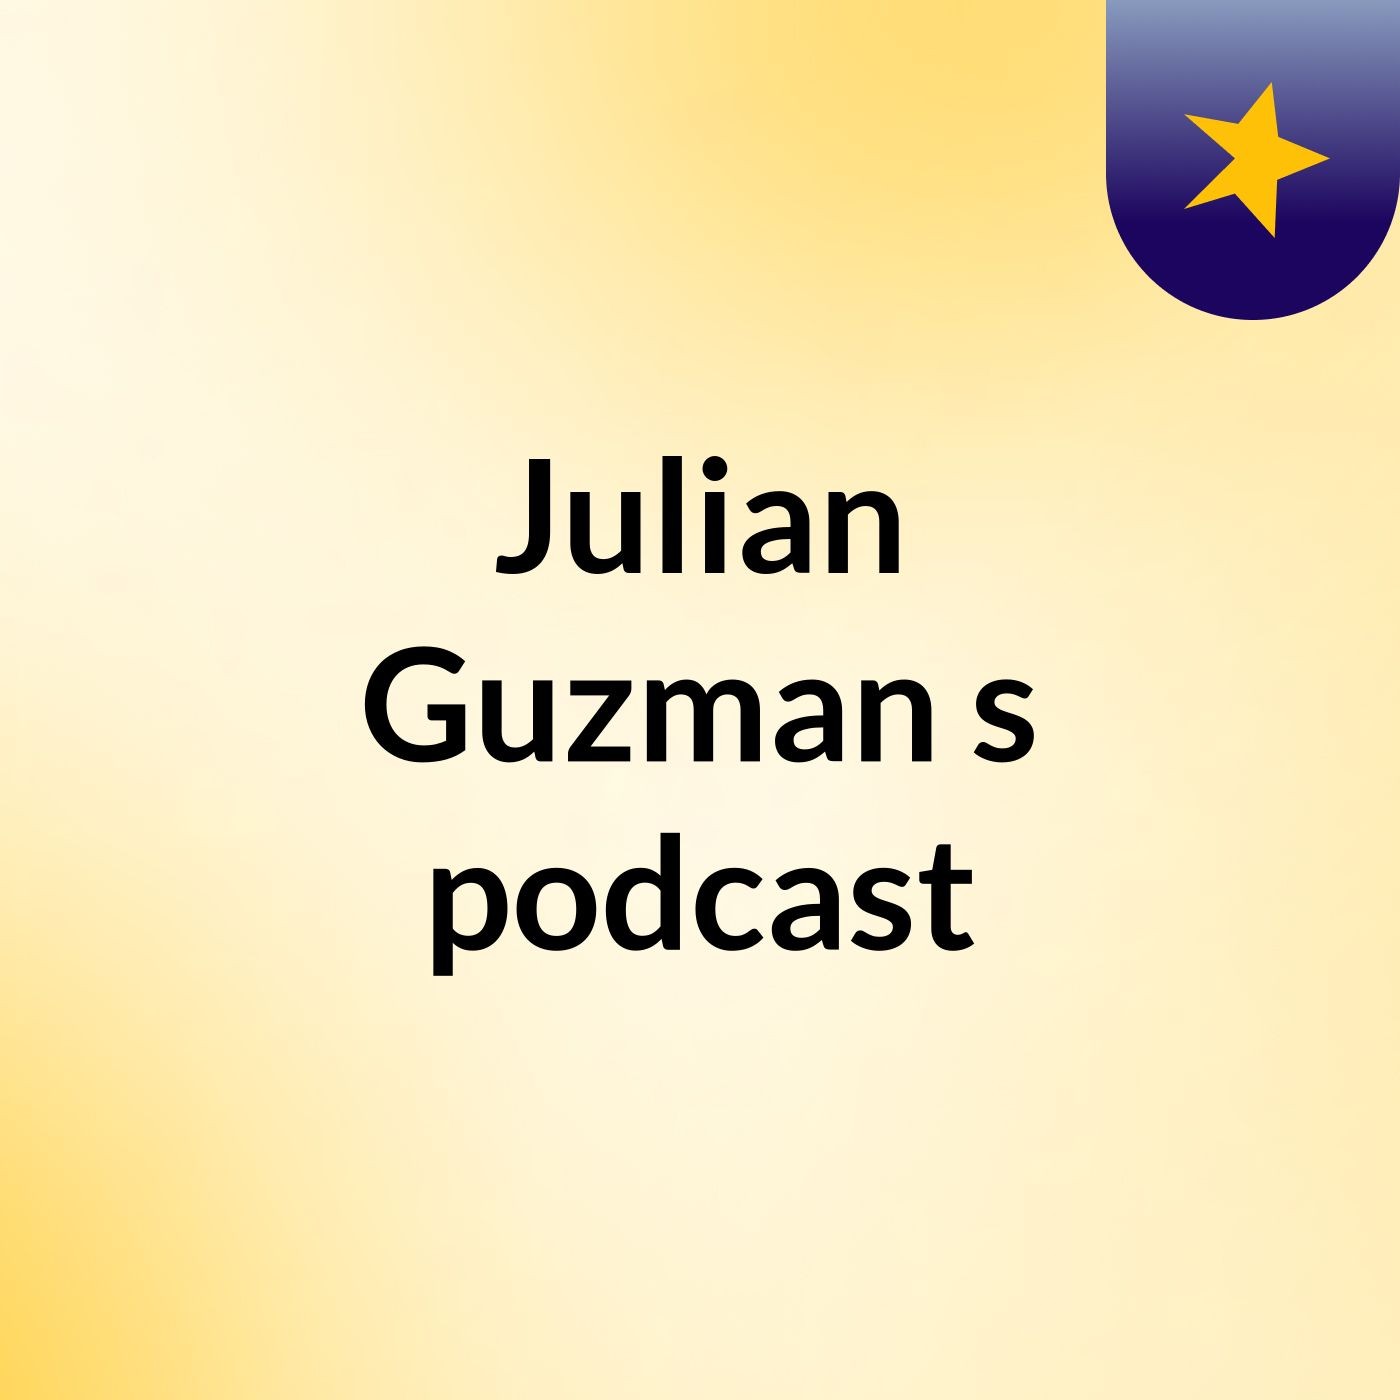 Julian Guzman's podcast